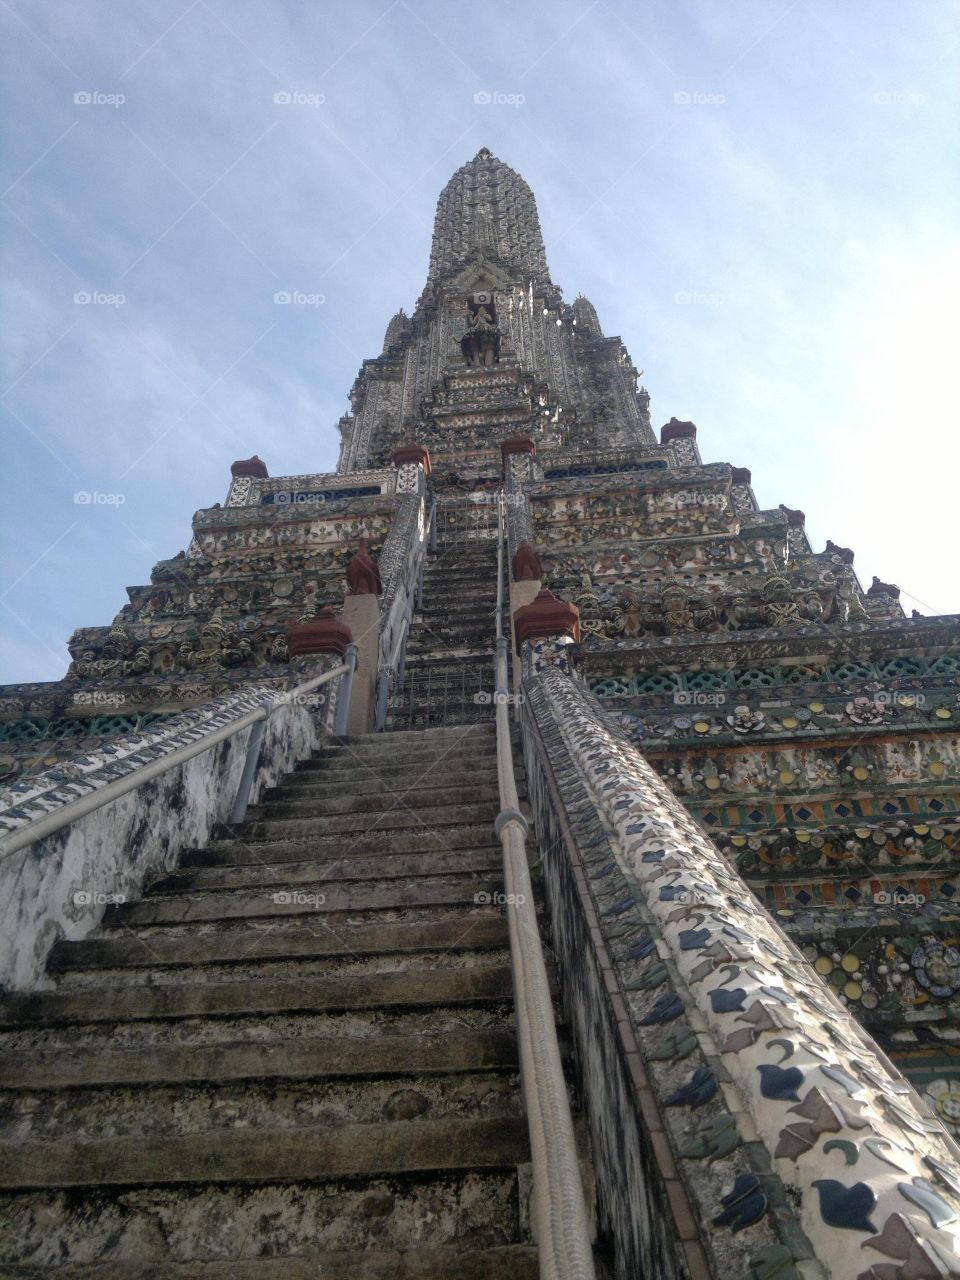 Wat Arun, temple of the dawn .... tough climb to the top